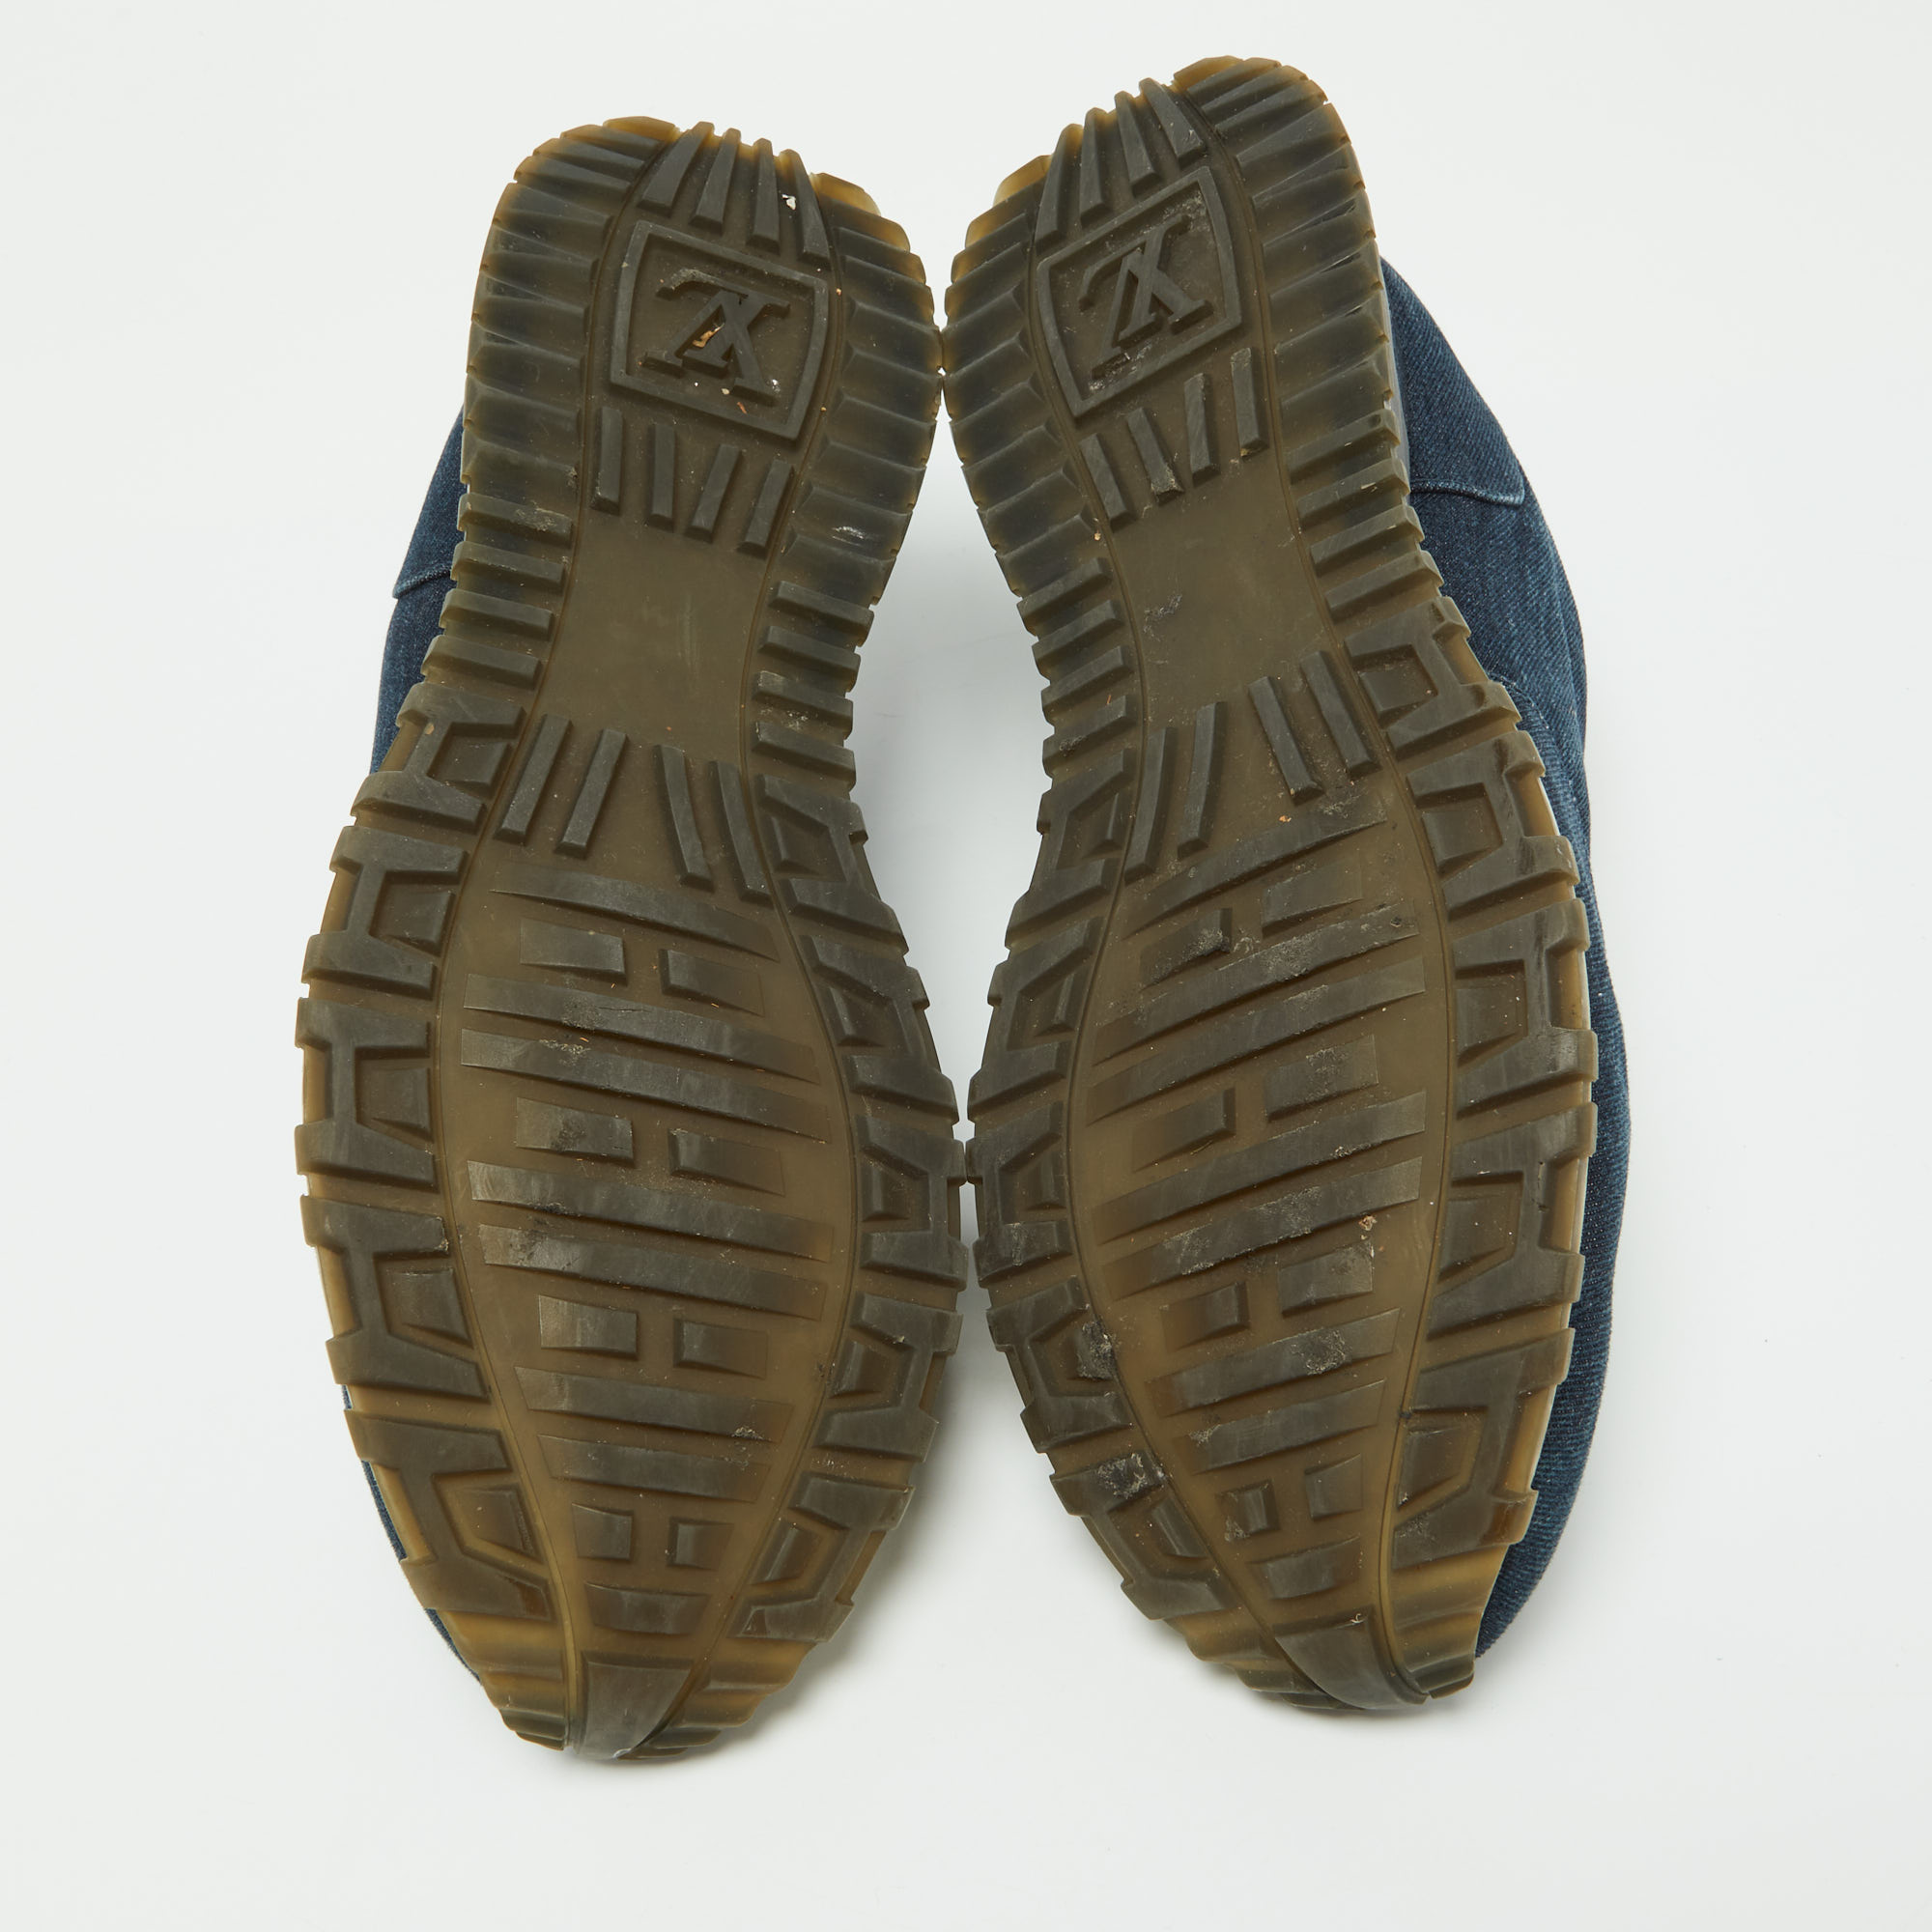 Louis Vuitton Navy Blue Denim Low Top Sneakers Size 43